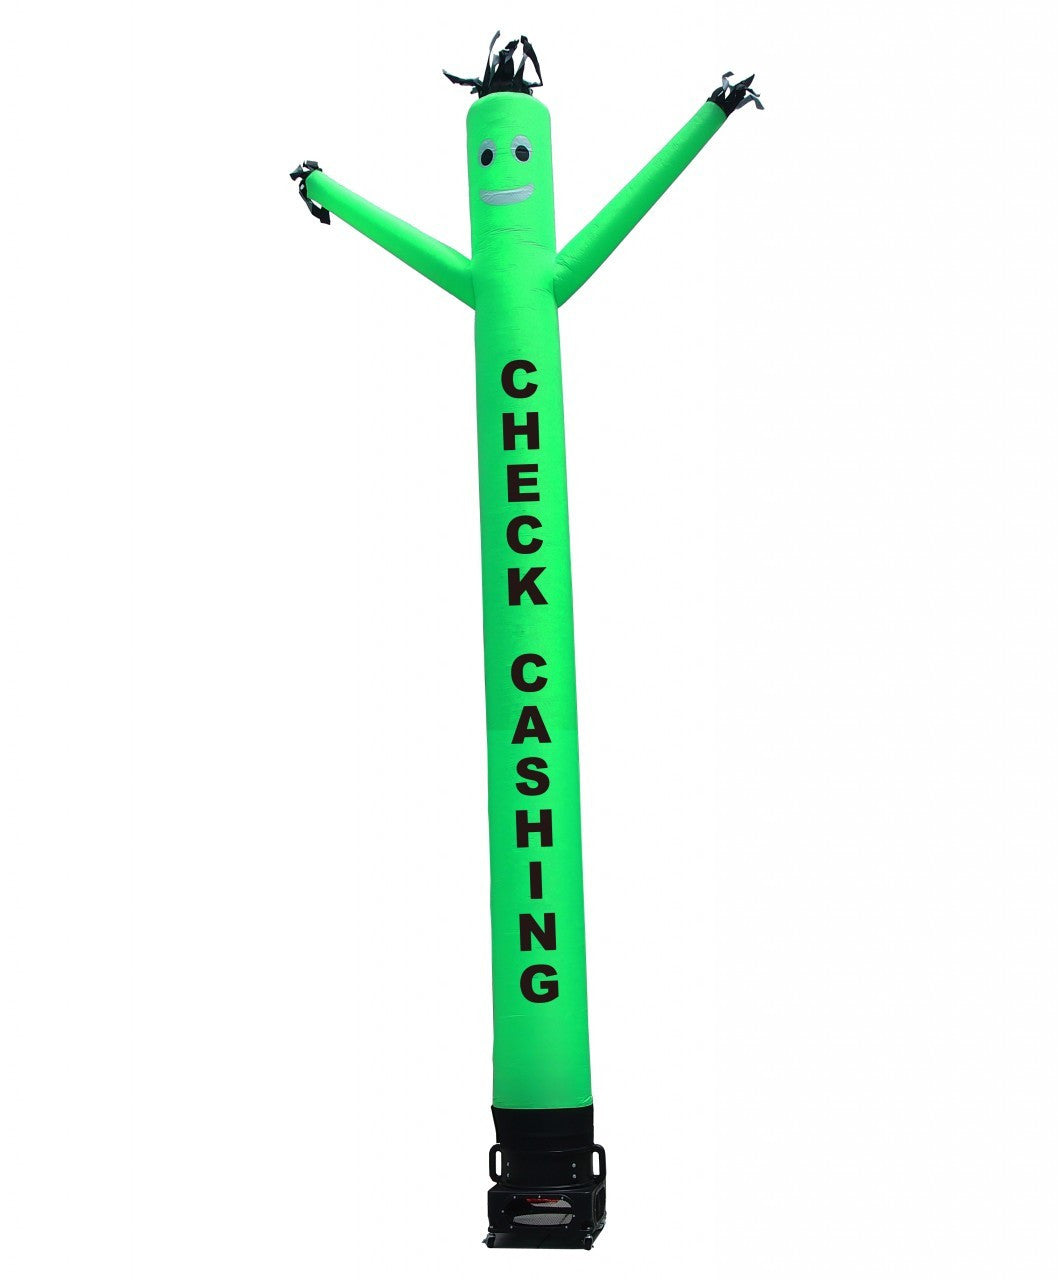 20ft Check Cashing Green Air Dancer Tube Man Inflatables